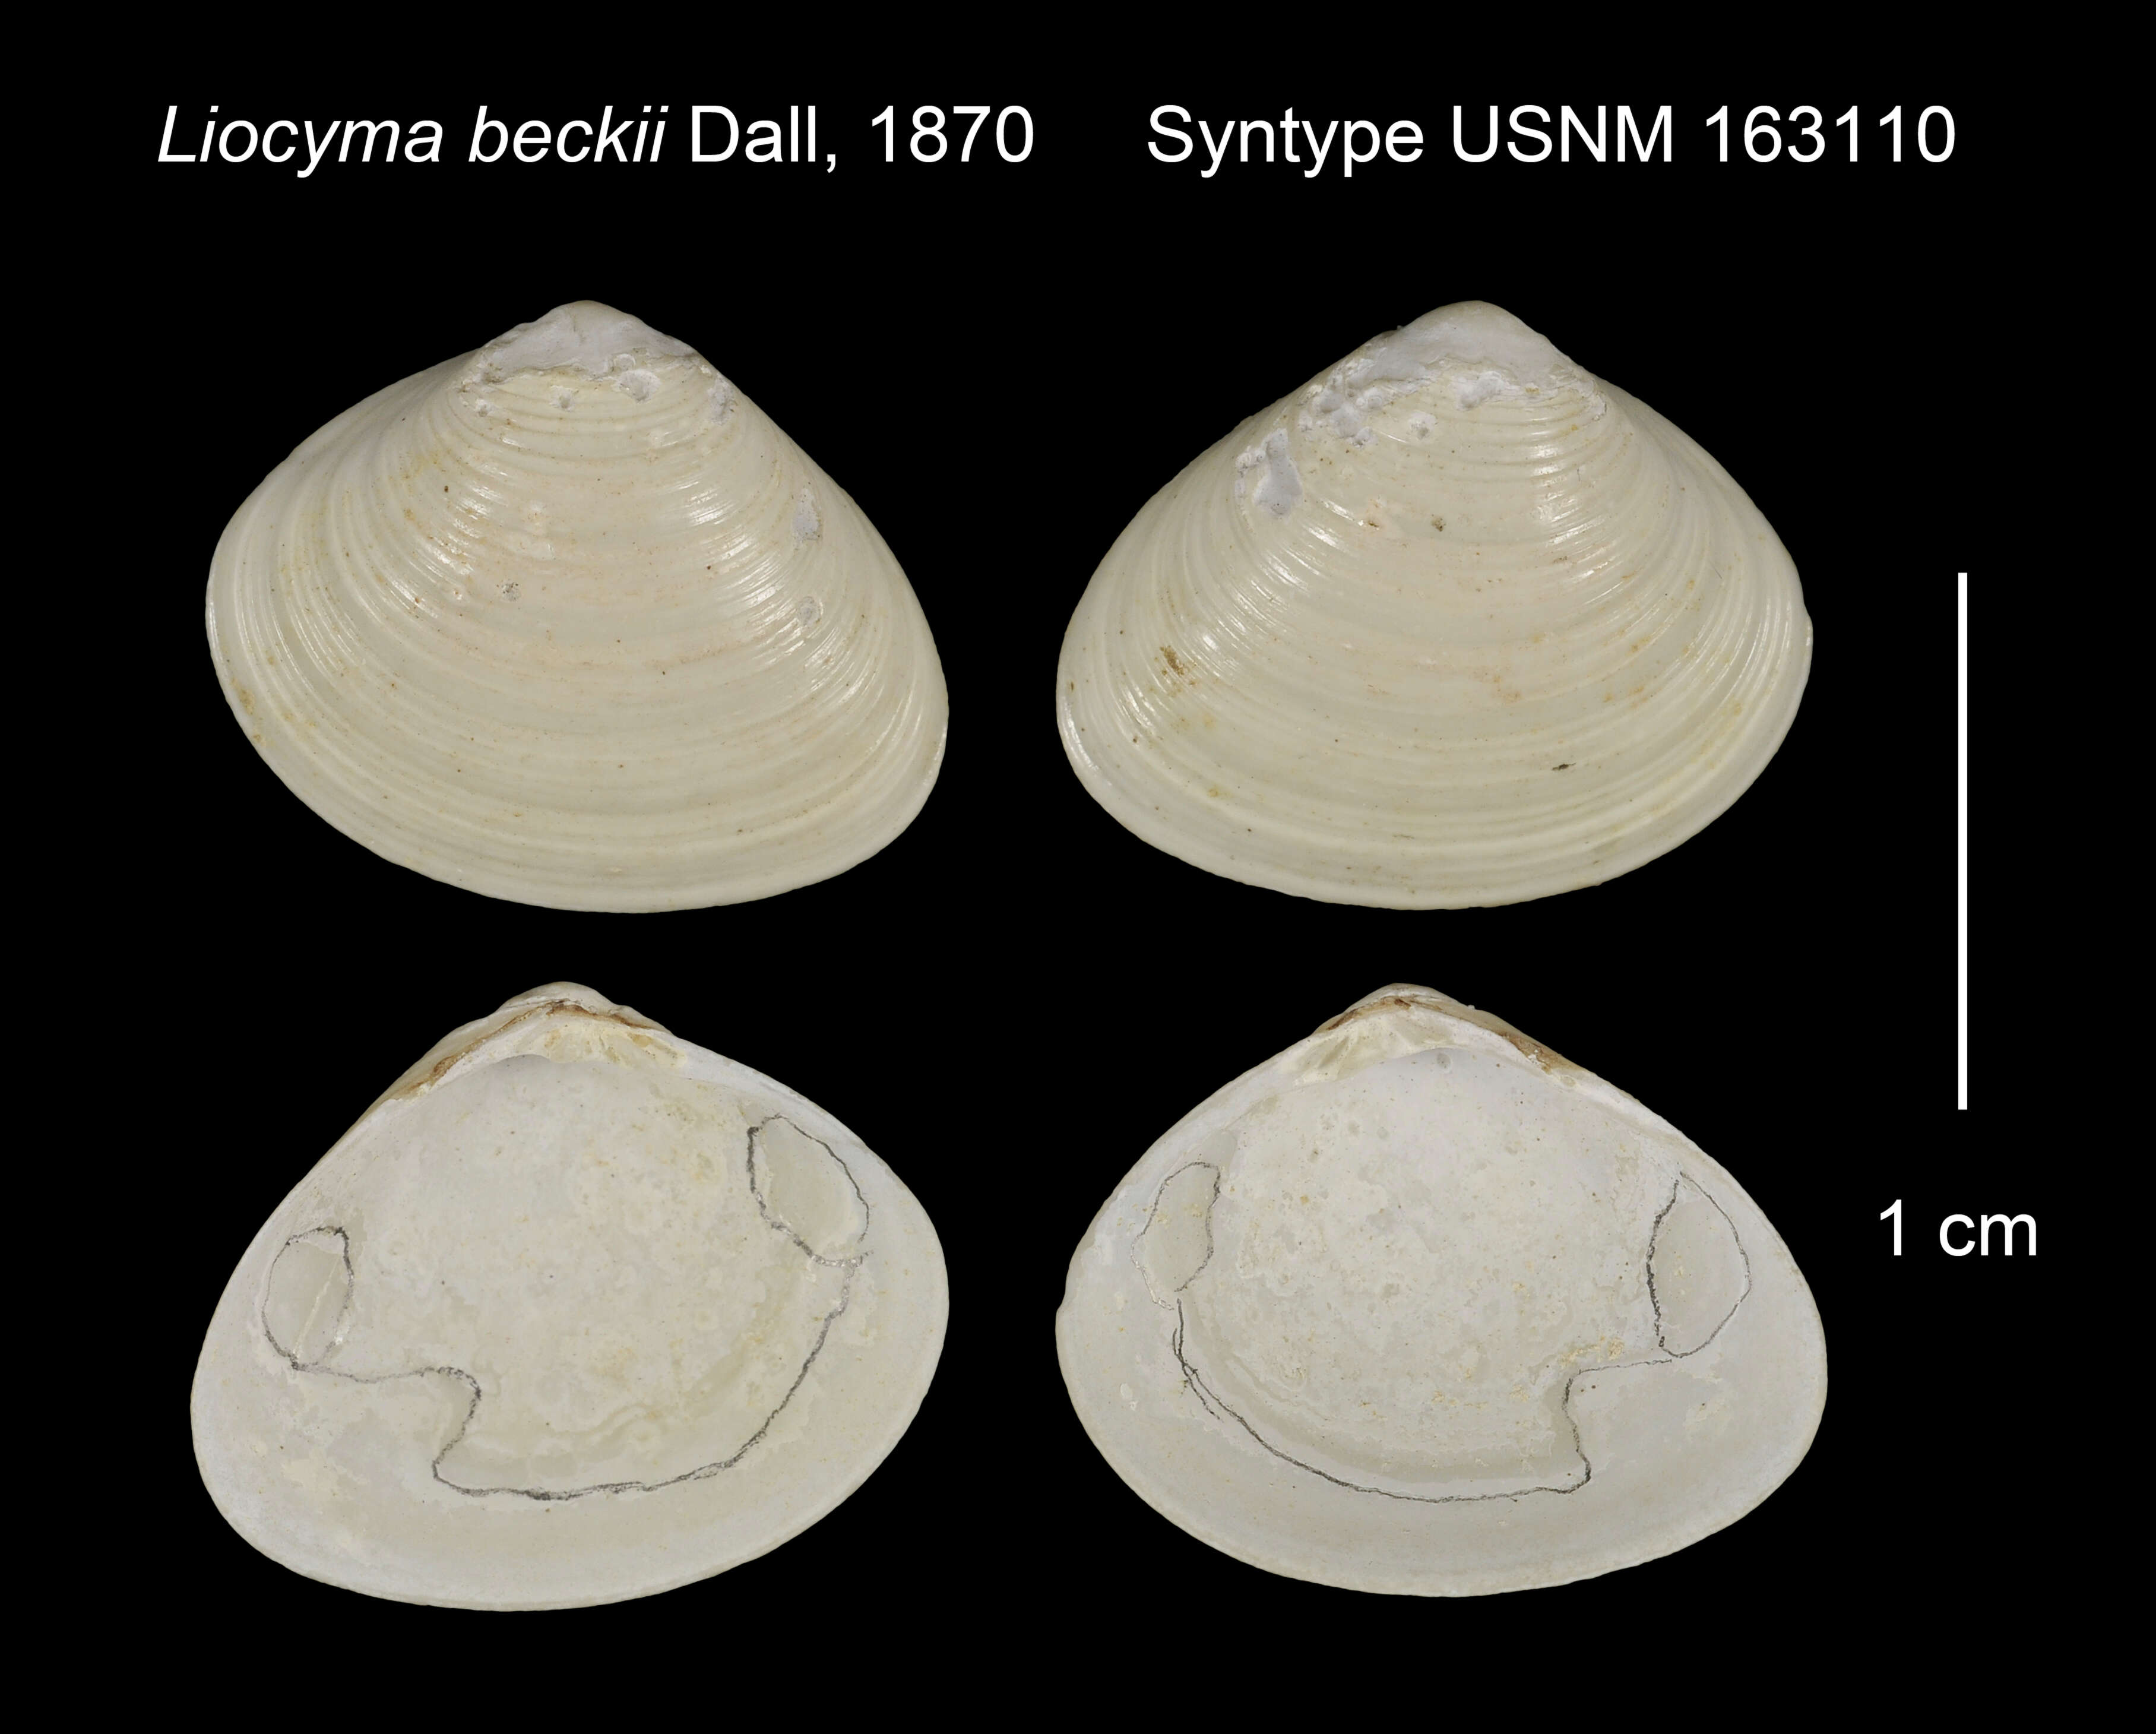 Image of Liocyma beckii Dall 1870